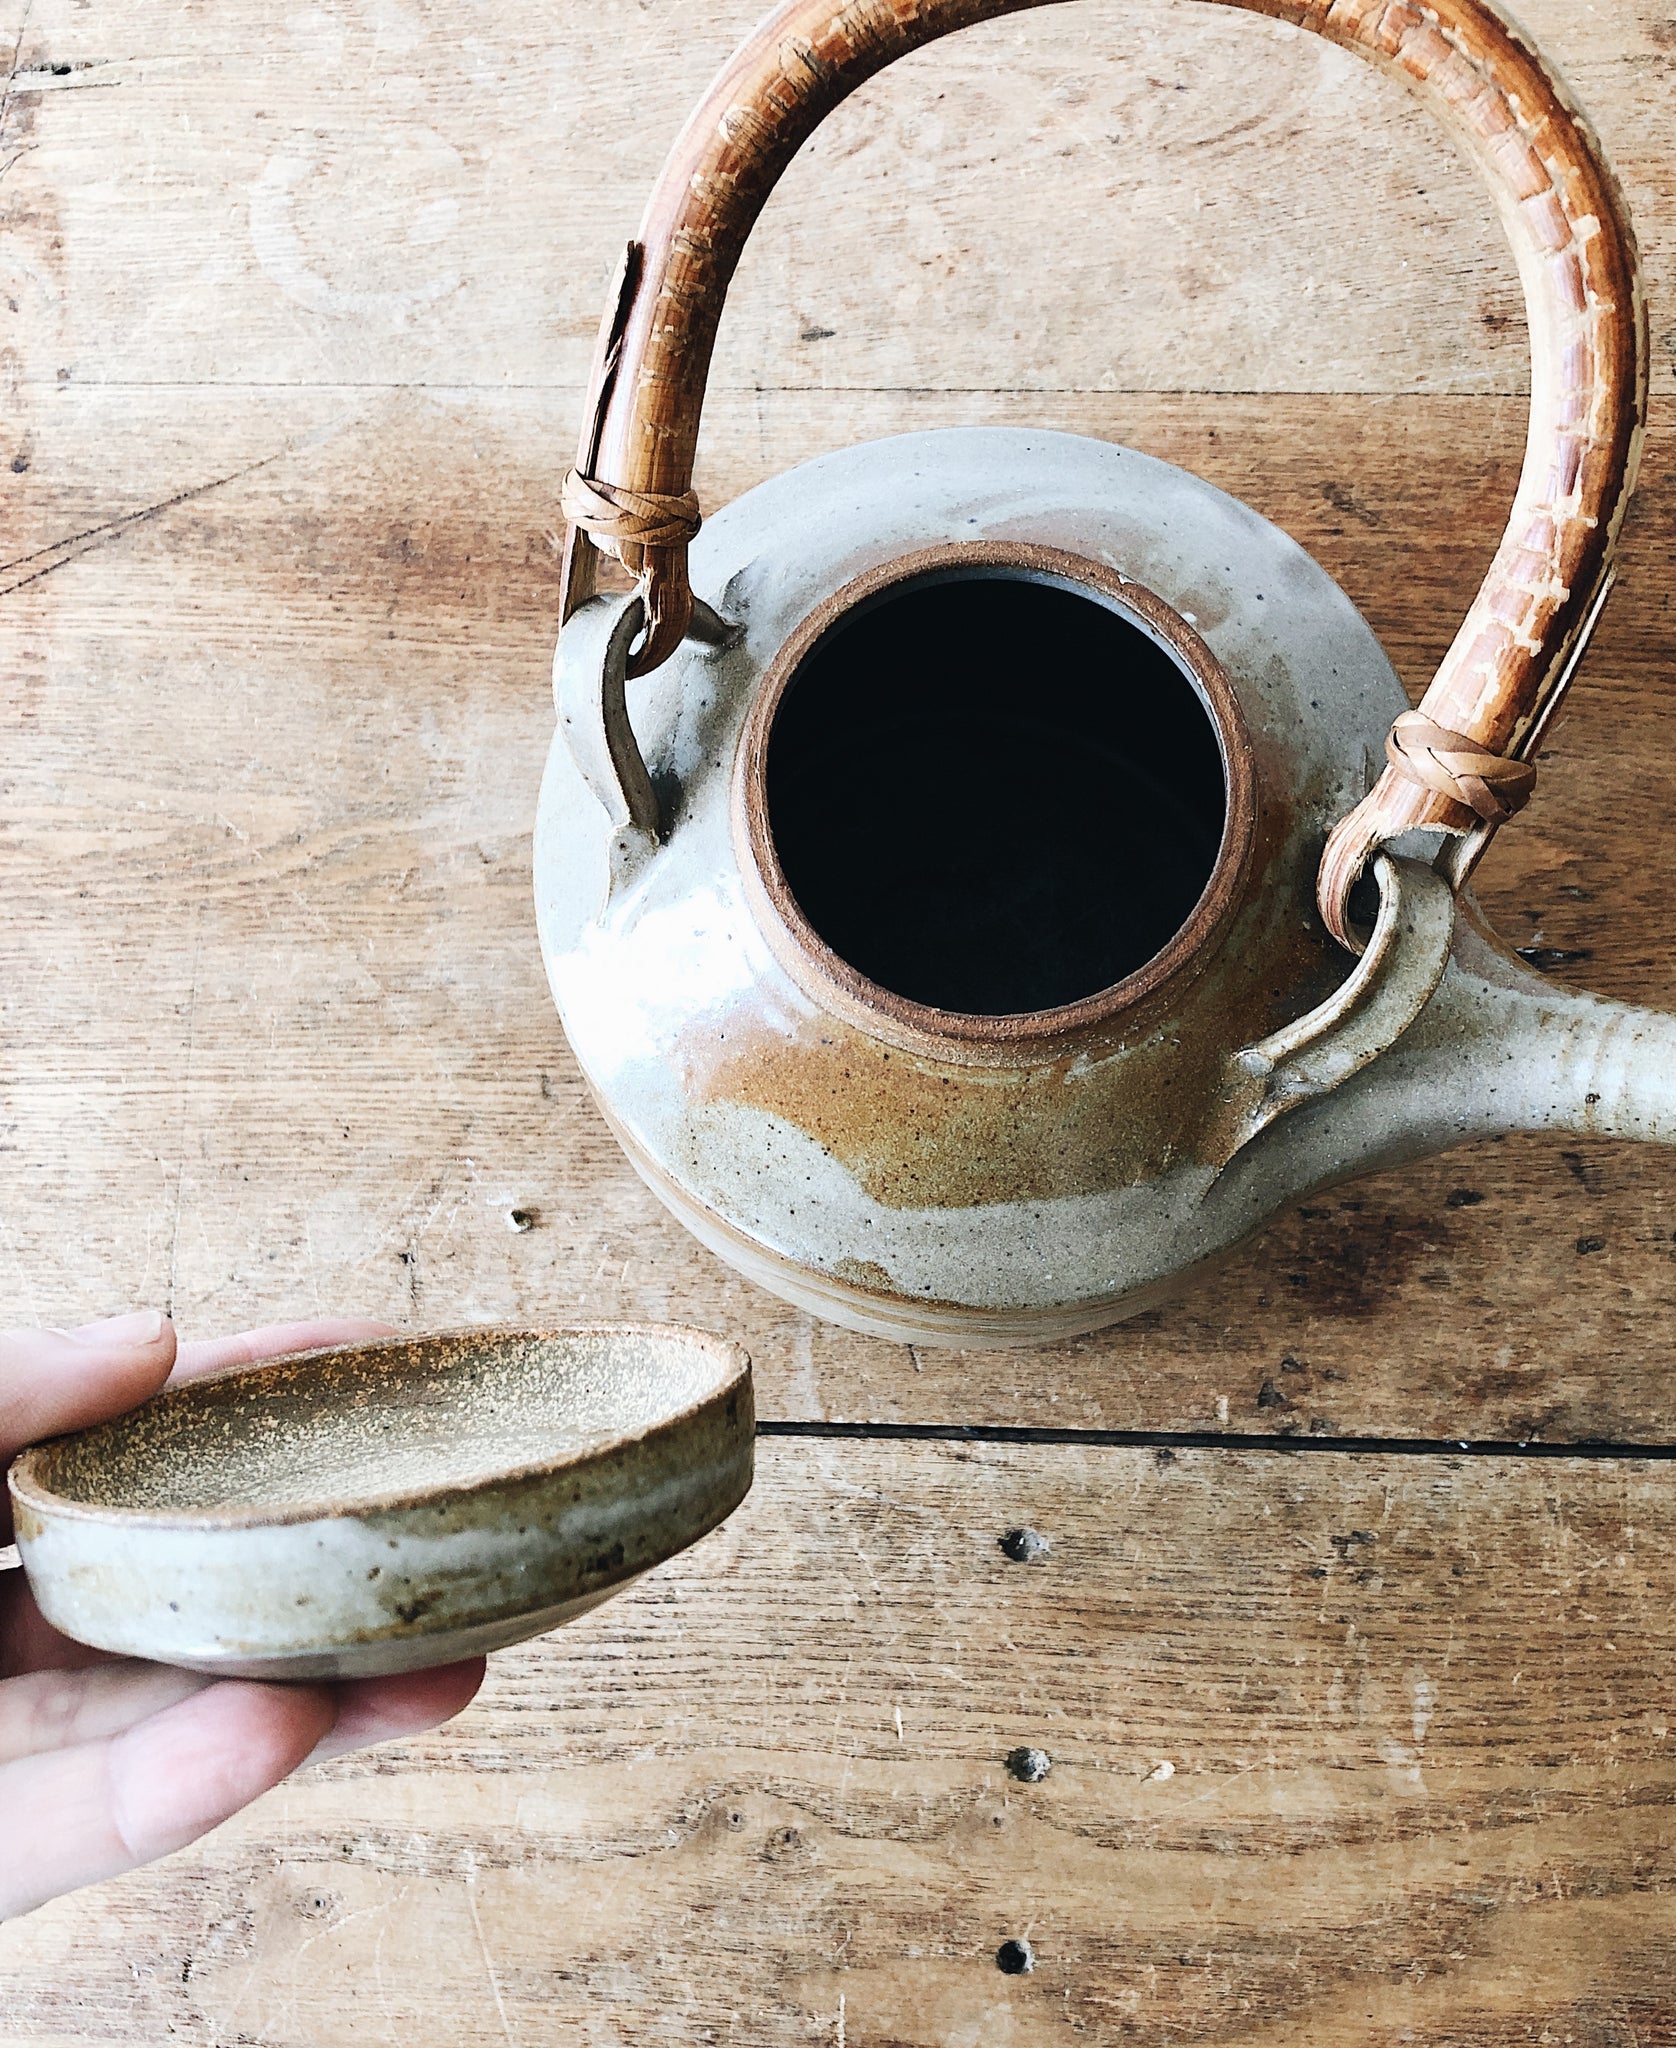 Vintage Ceramic Teapot